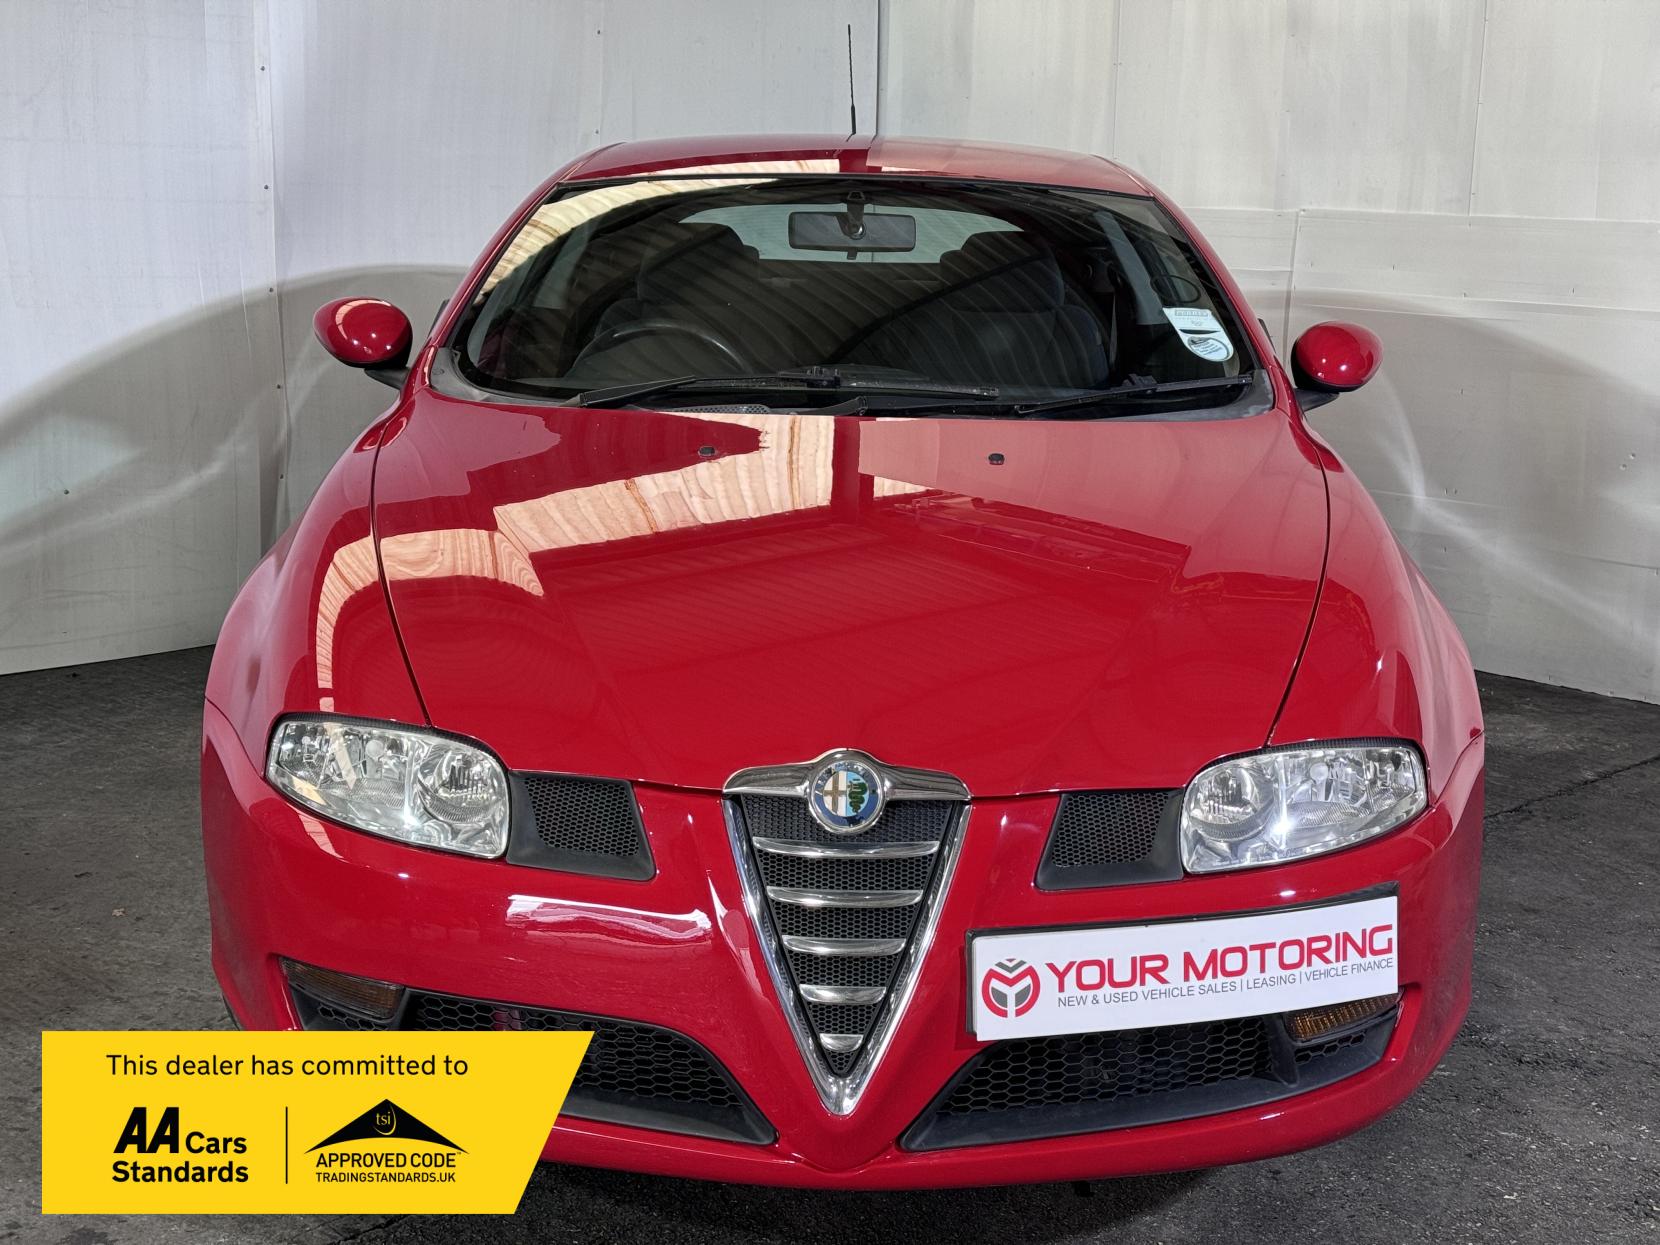 Alfa Romeo GT 2.0 JTS Coupe 2dr Petrol Manual (207 g/km, 165 bhp)